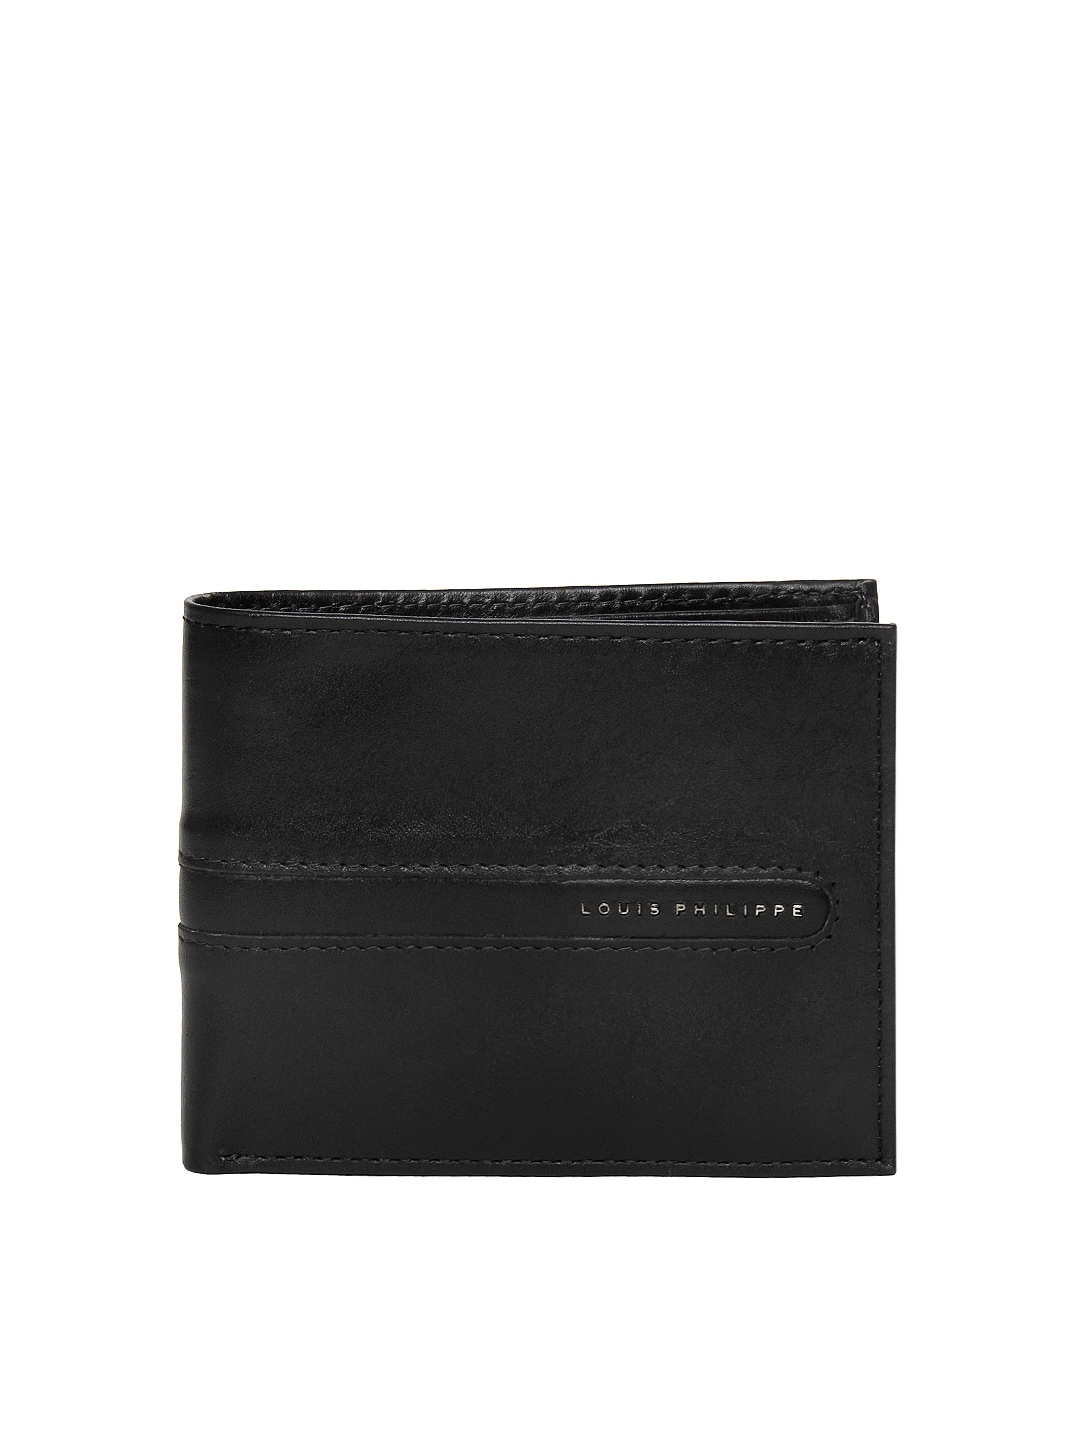 Buy Louis Philippe Men Black Leather Wallet - 365 - Accessories for Men - 423126